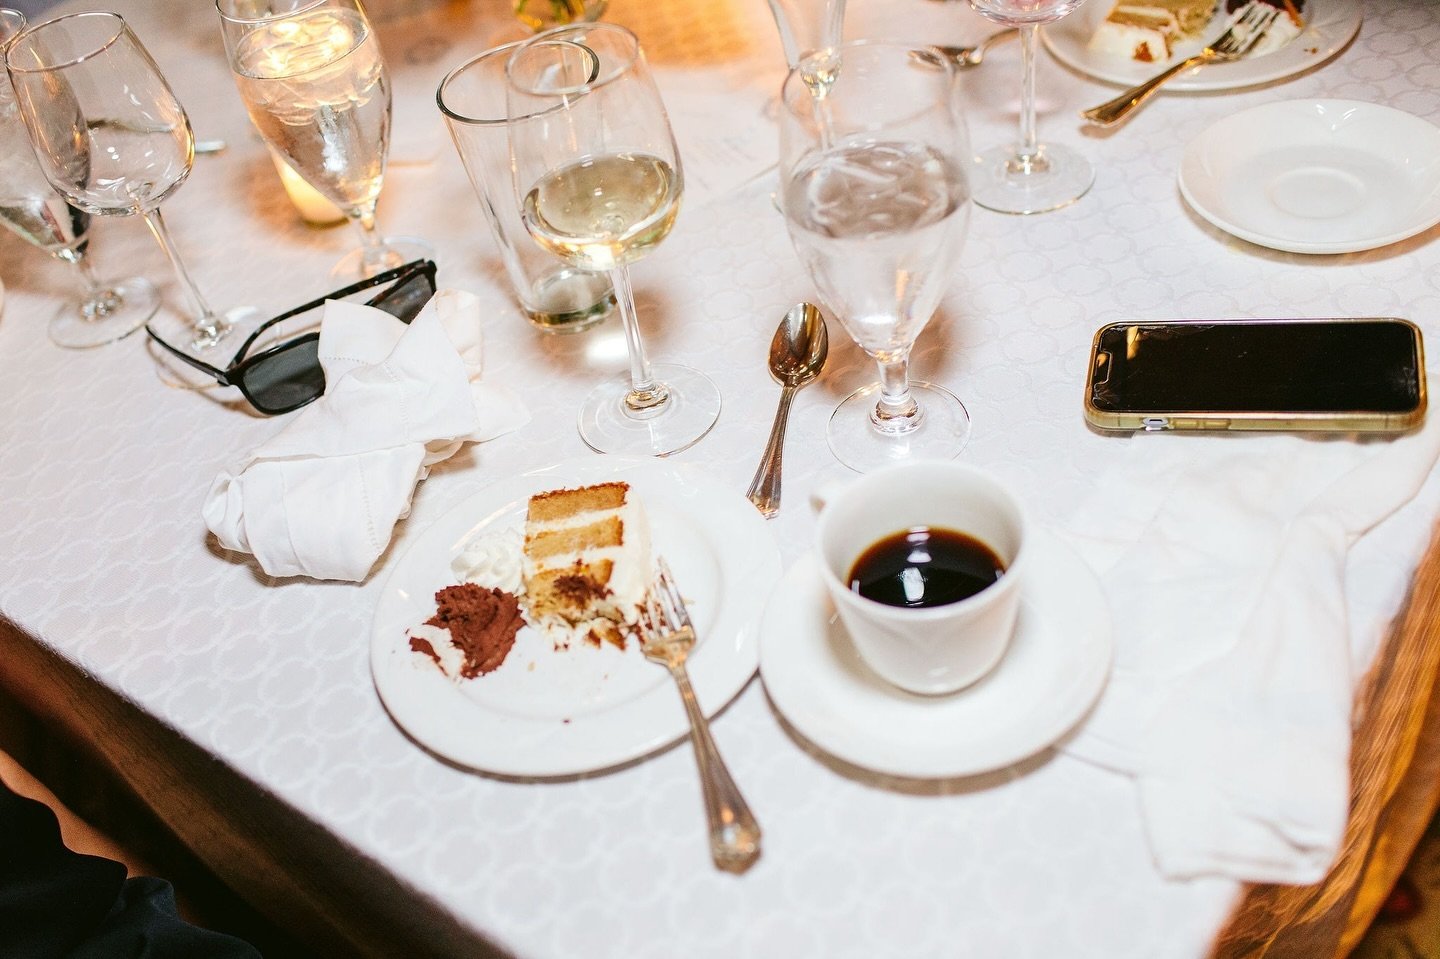 Coffee, sunnies, a half-eaten slice of cake&hellip;remnants of an epic wedding!
.
.
.
PHOTO + VIDEO - @nicodemcreative​​​​​​​​
PLANNER - @effortless_events
VENUE - @sunsetridgecc
FLORIST - @lifeinbloom
HAIR + MAKEUP - @rachelreiman with @rcbeautynews